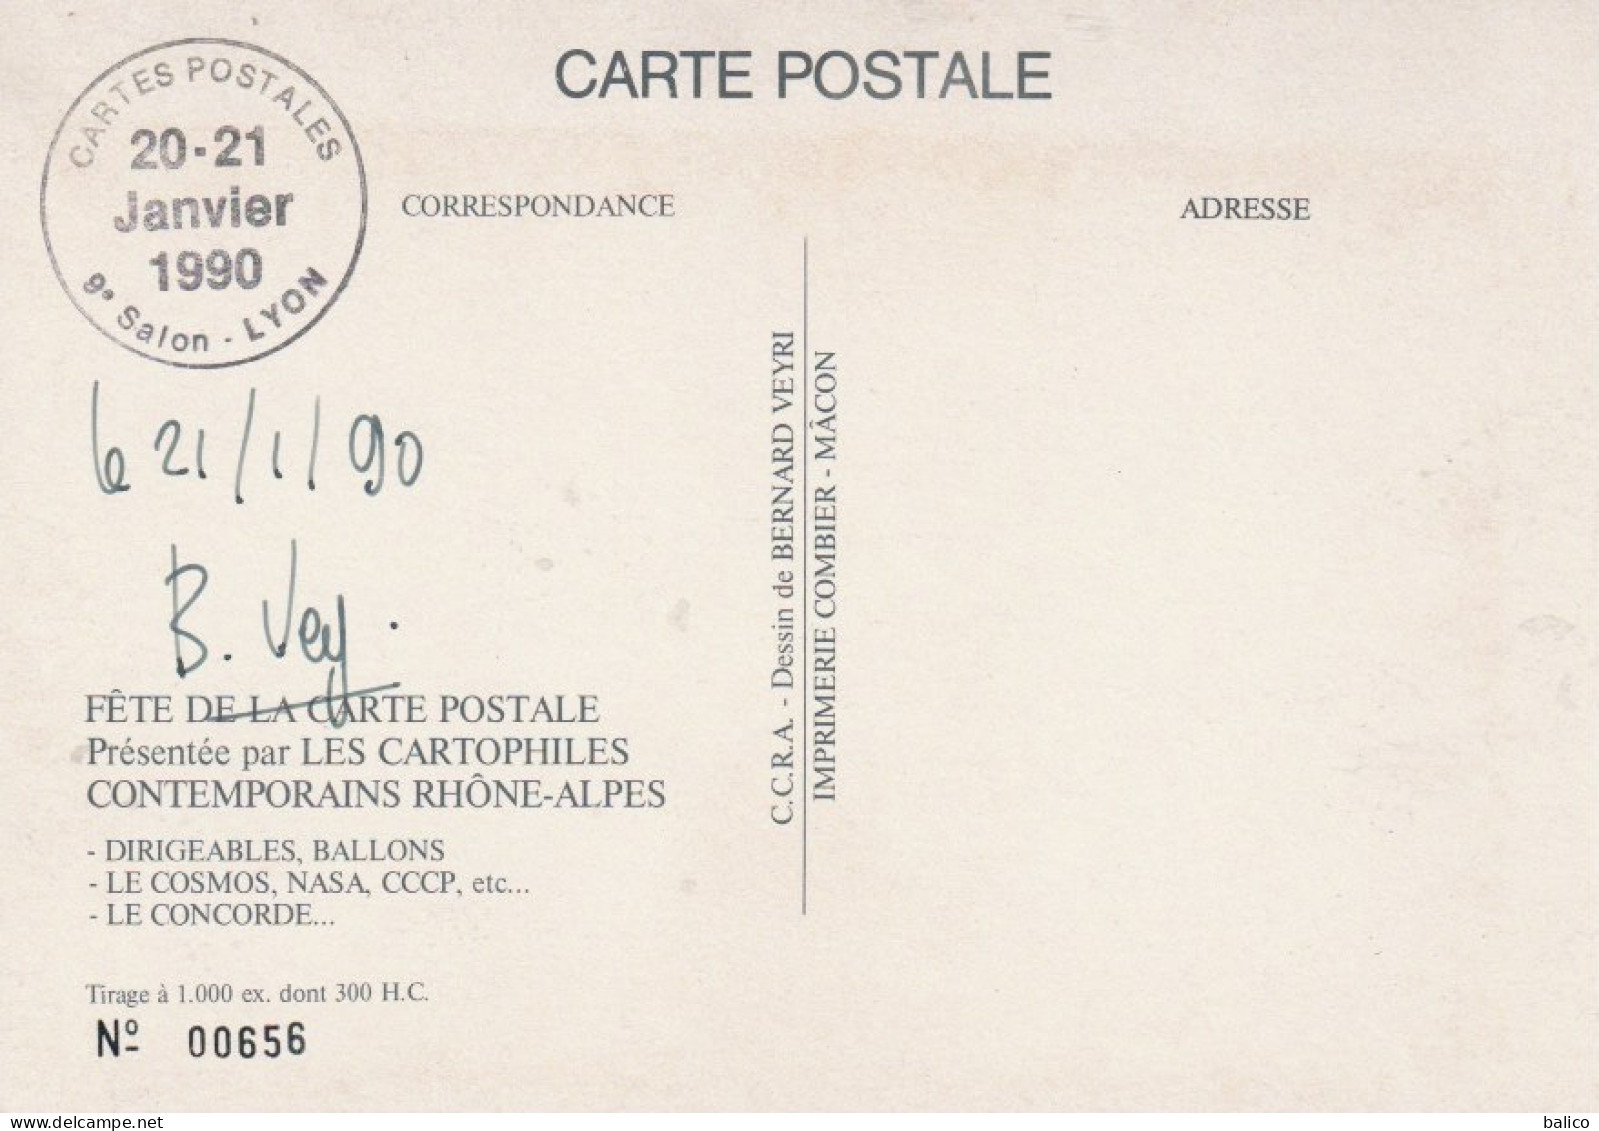 9ème Salon De La CARTE POSTALE - LYON - 20 Et 21 Janvier 1990 - Illustré Par,  VEYRI , Signé - Sammlerbörsen & Sammlerausstellungen